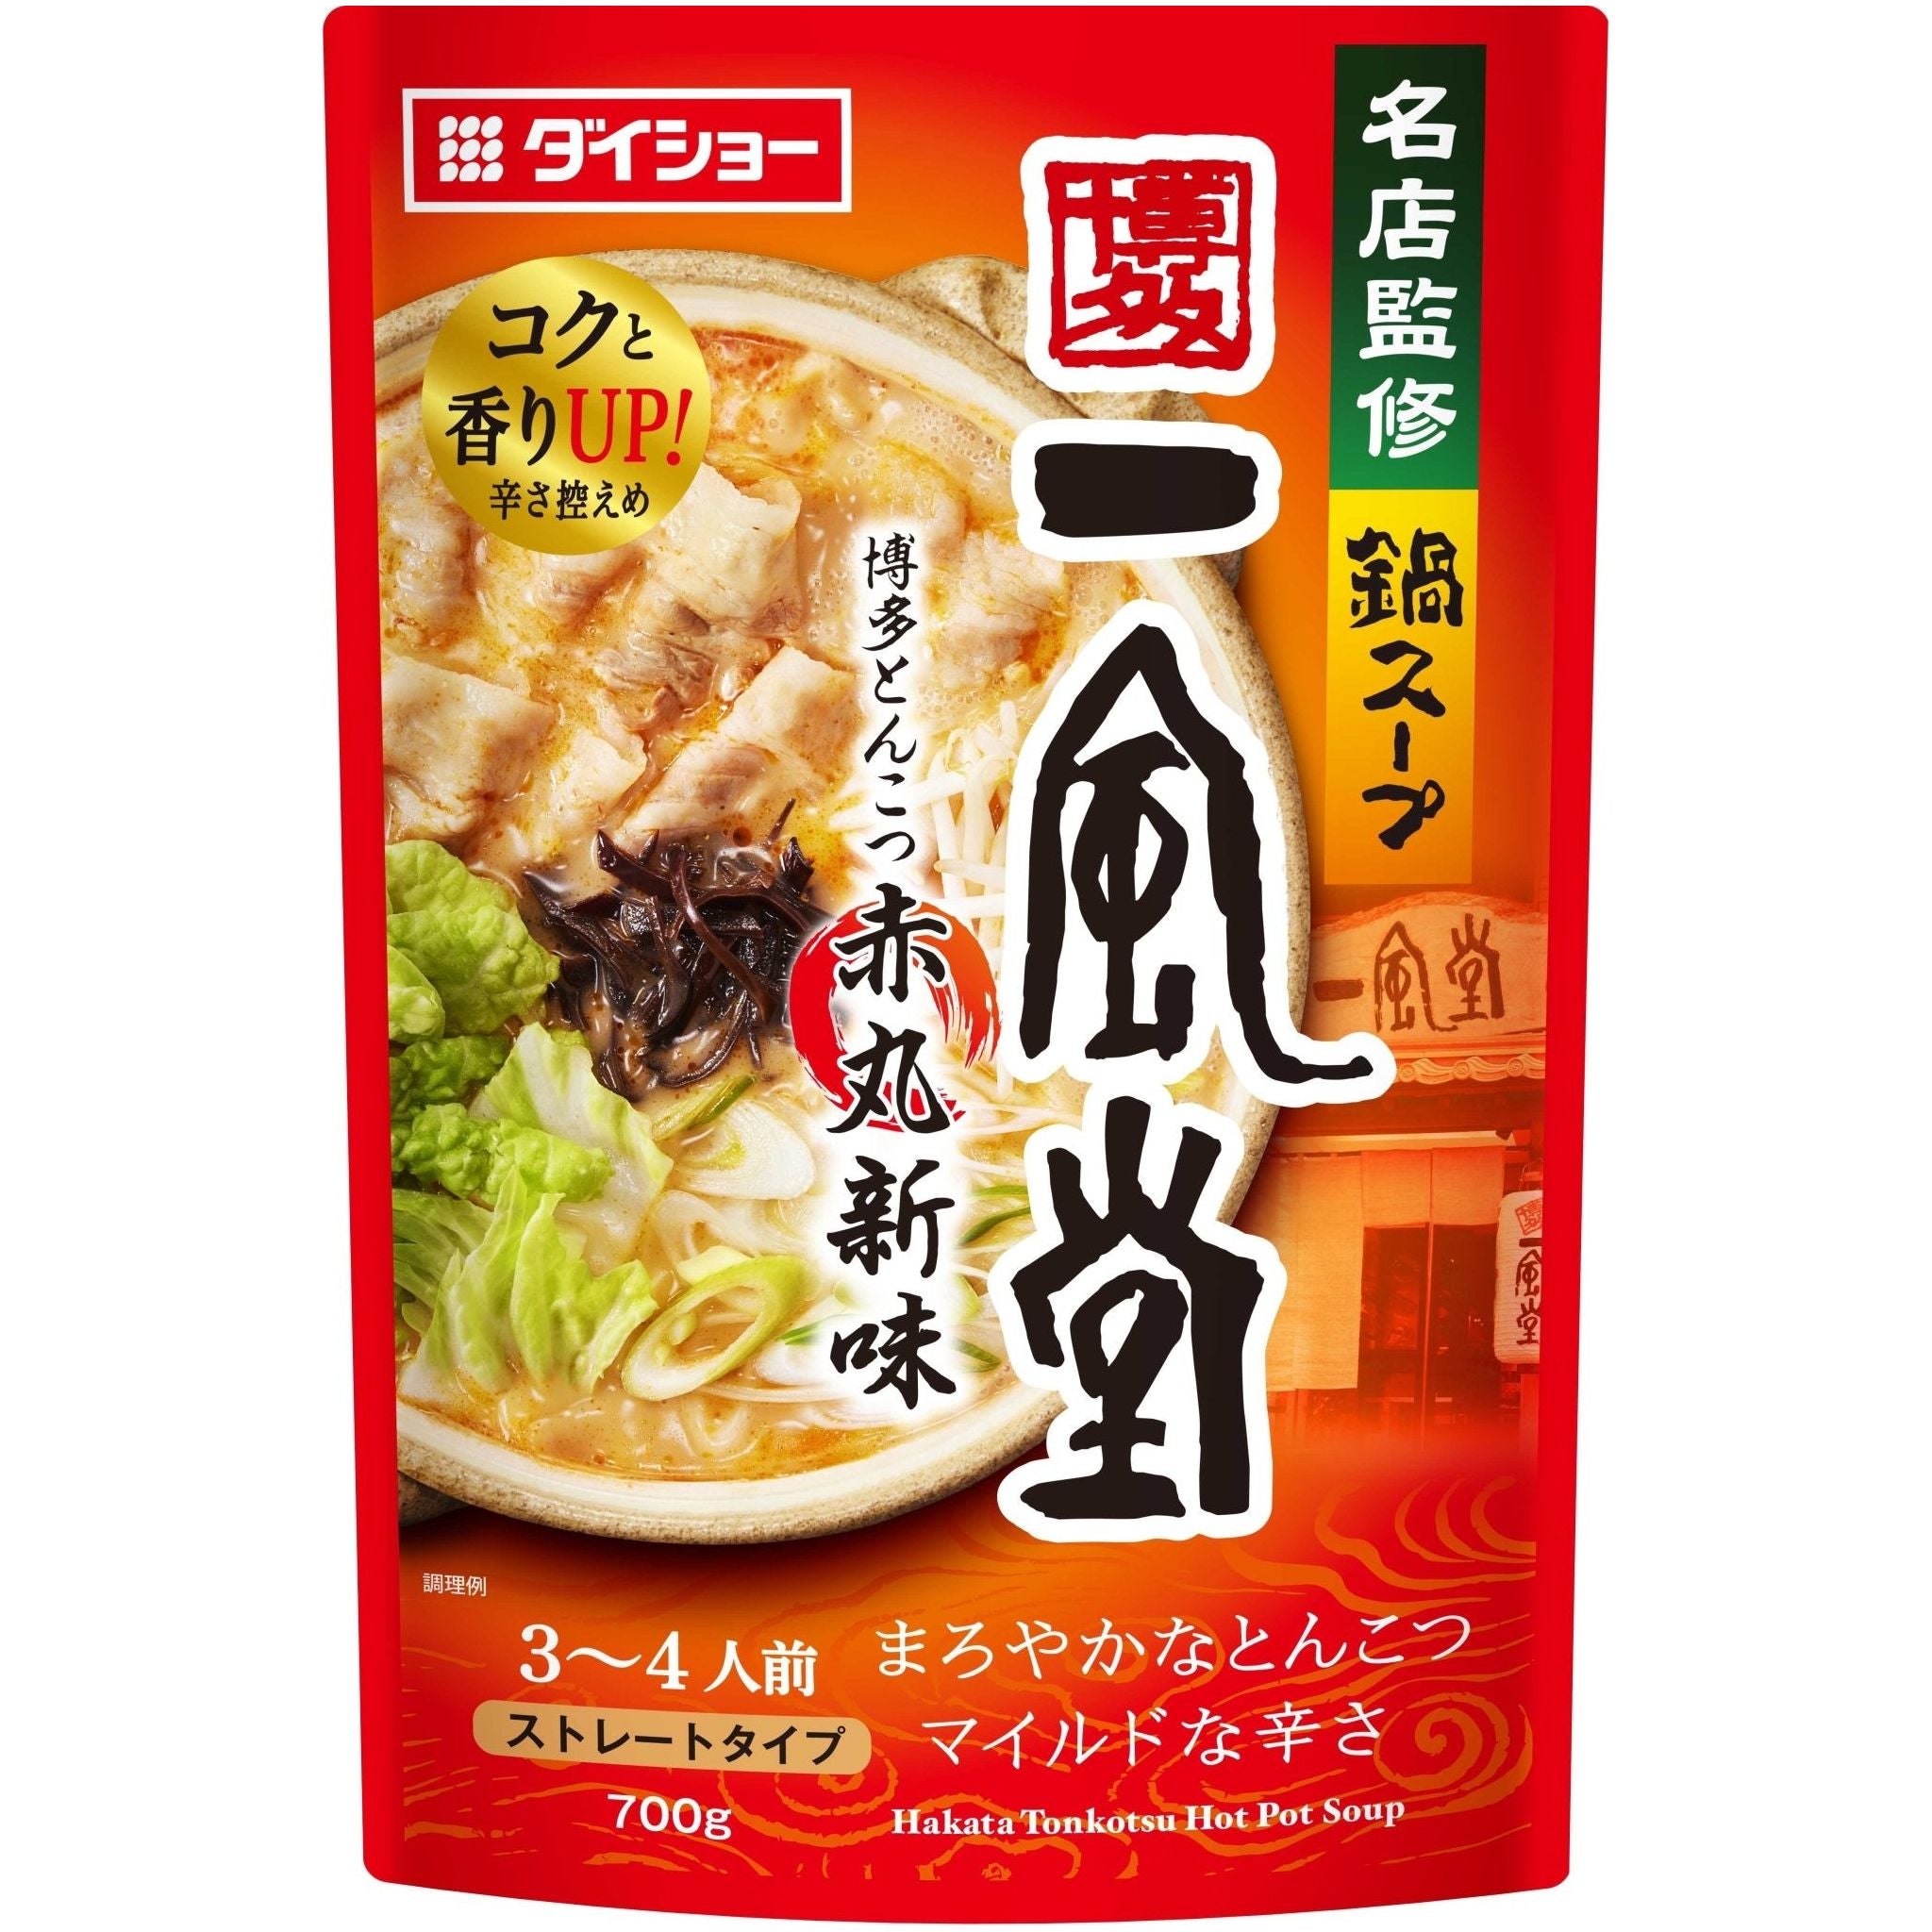 Daisho IPPUDO Hakata Tonkotsu Hot Pot Soup Base - Tokyo Fresh Direct